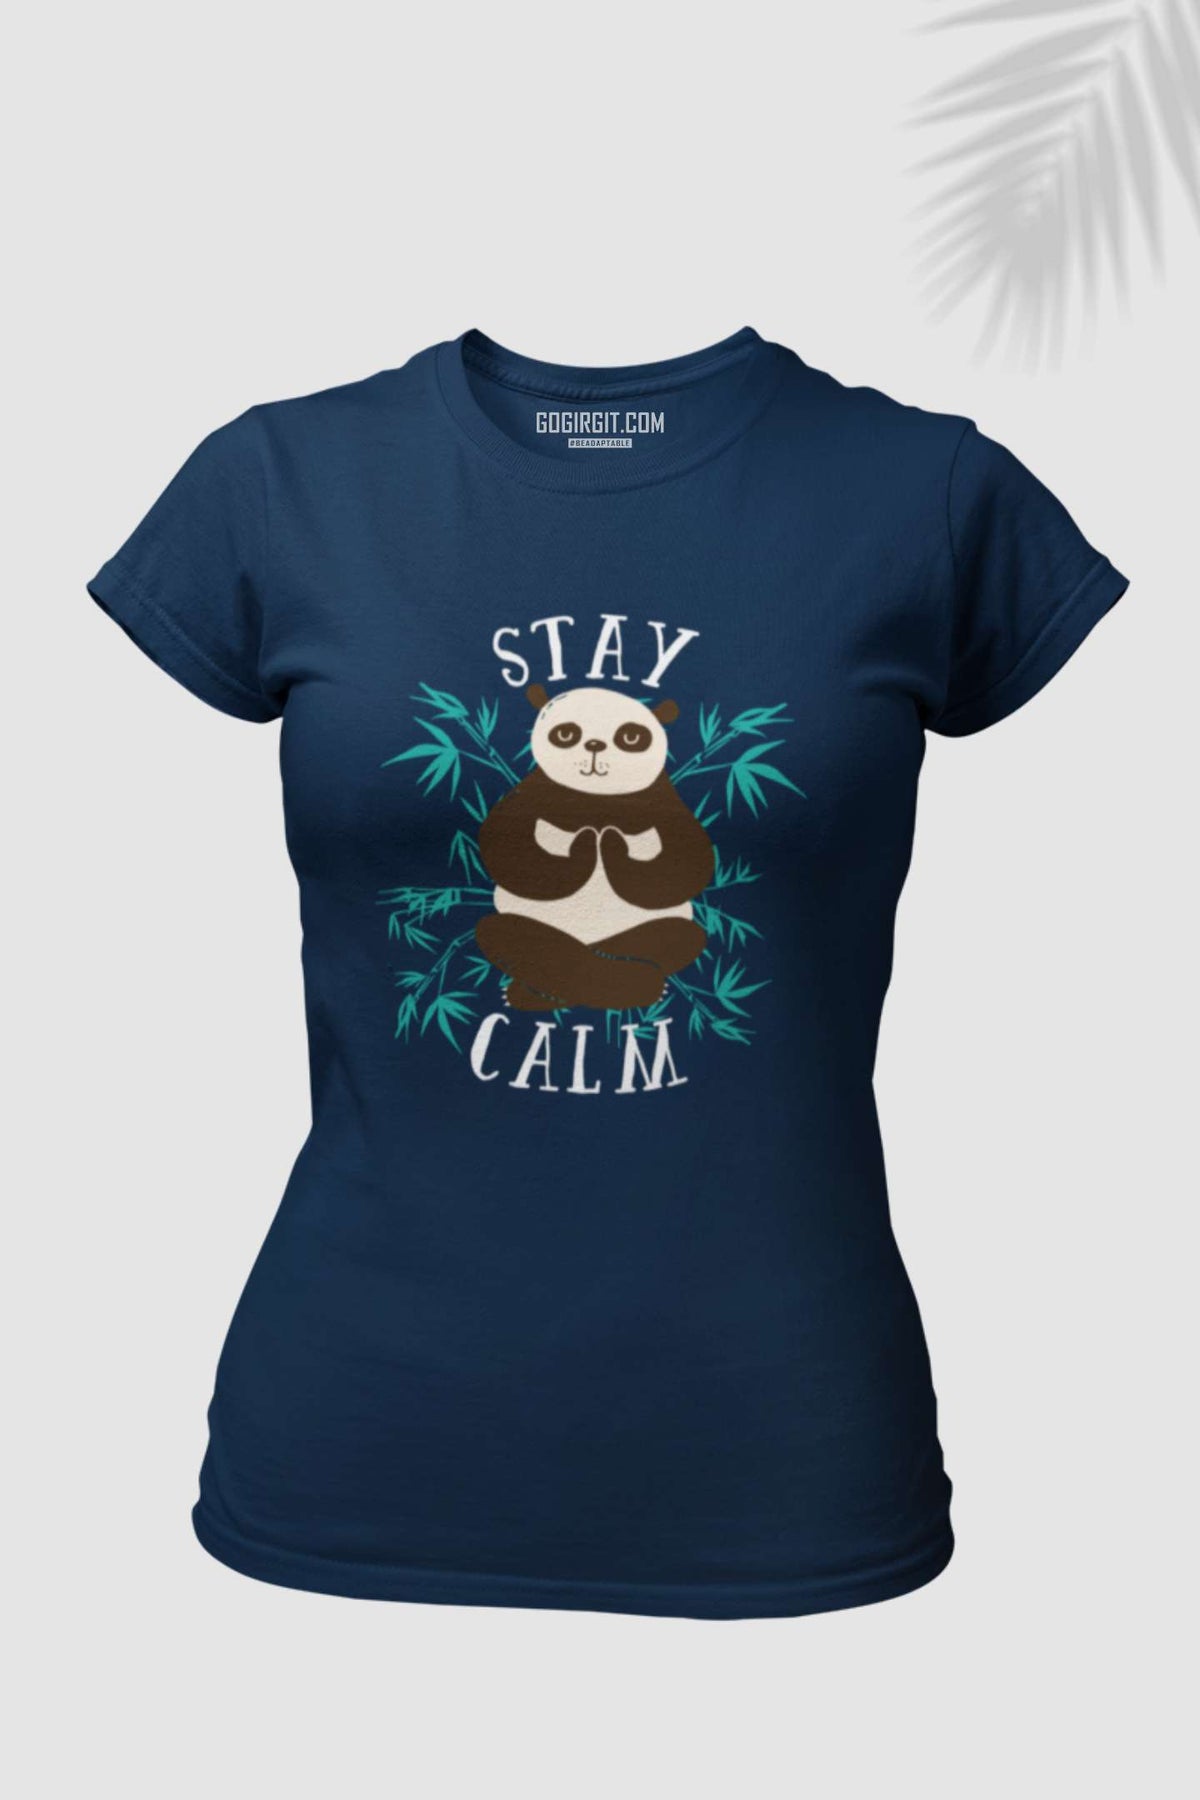 Stay Calm Panda Women's Half Sleeve Yoga T-shirt